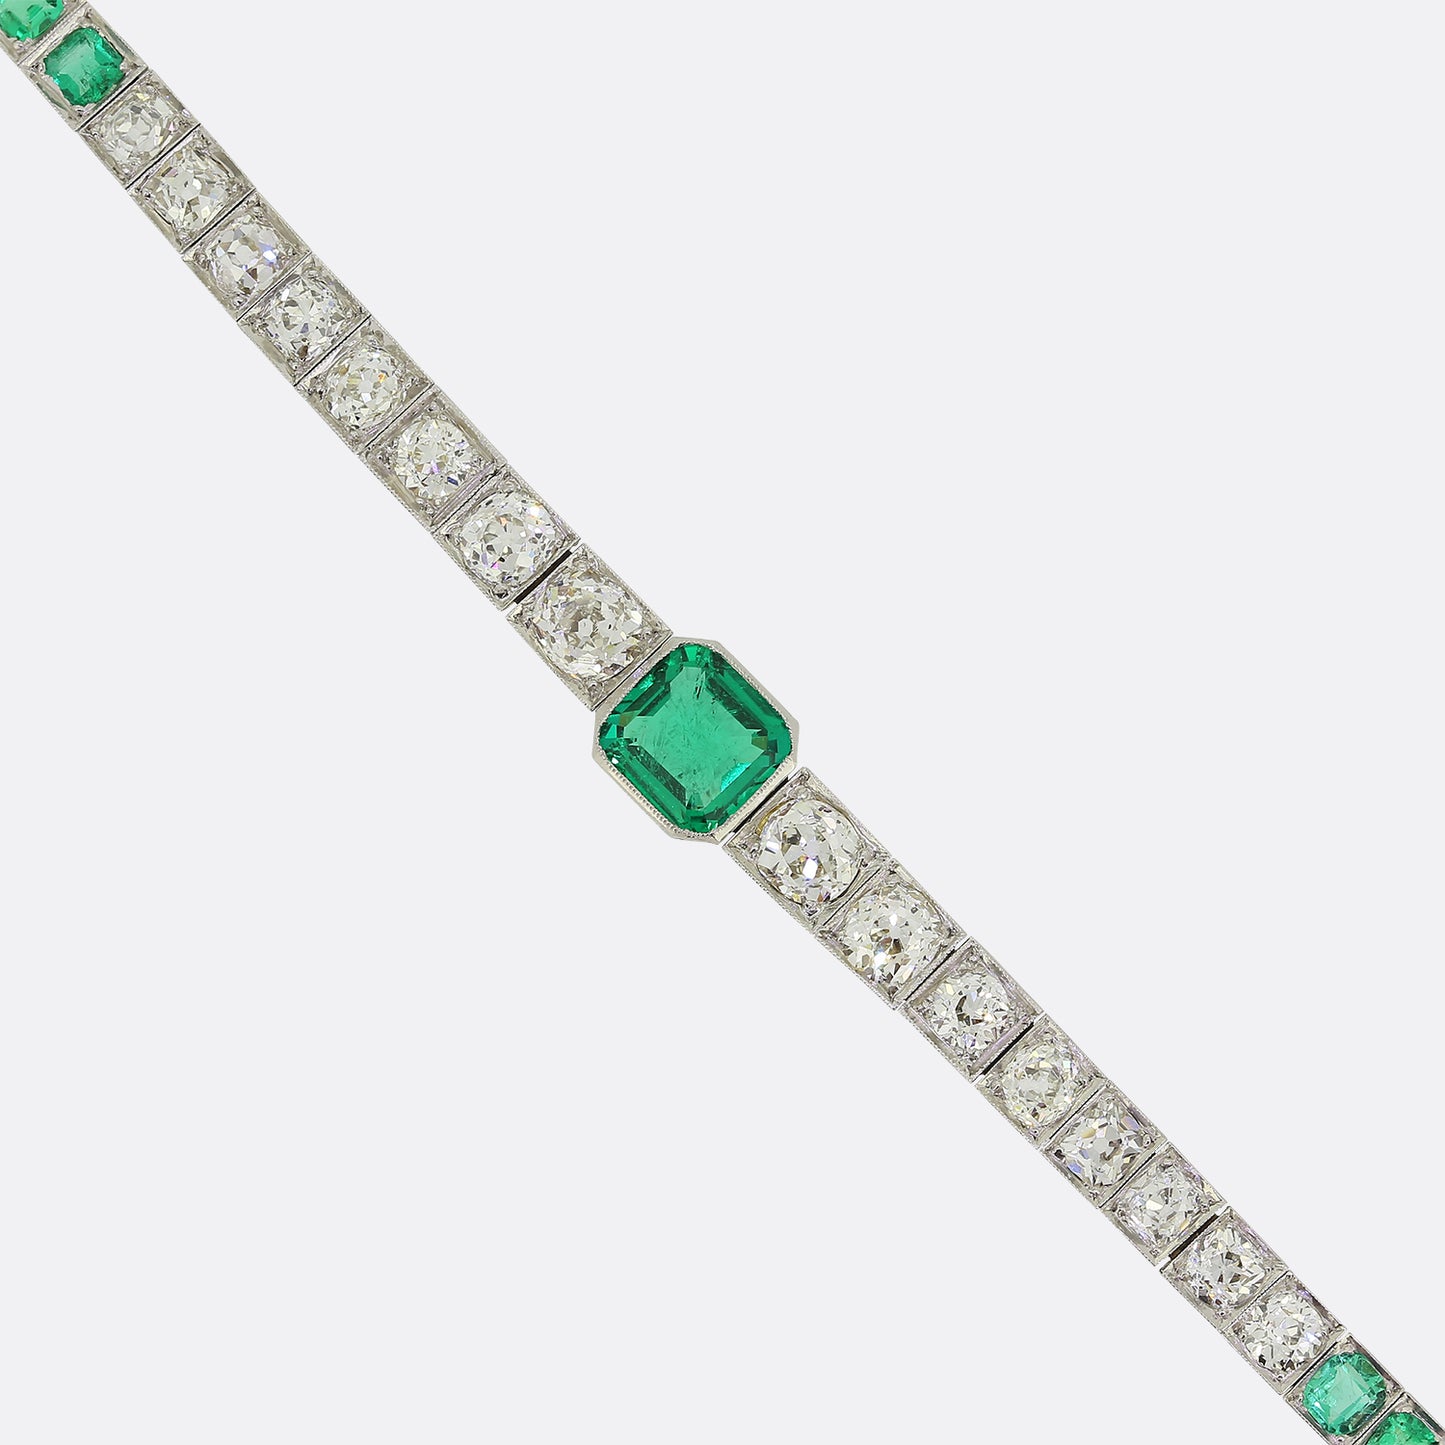 Art Deco Emerald and Diamond Bracelet